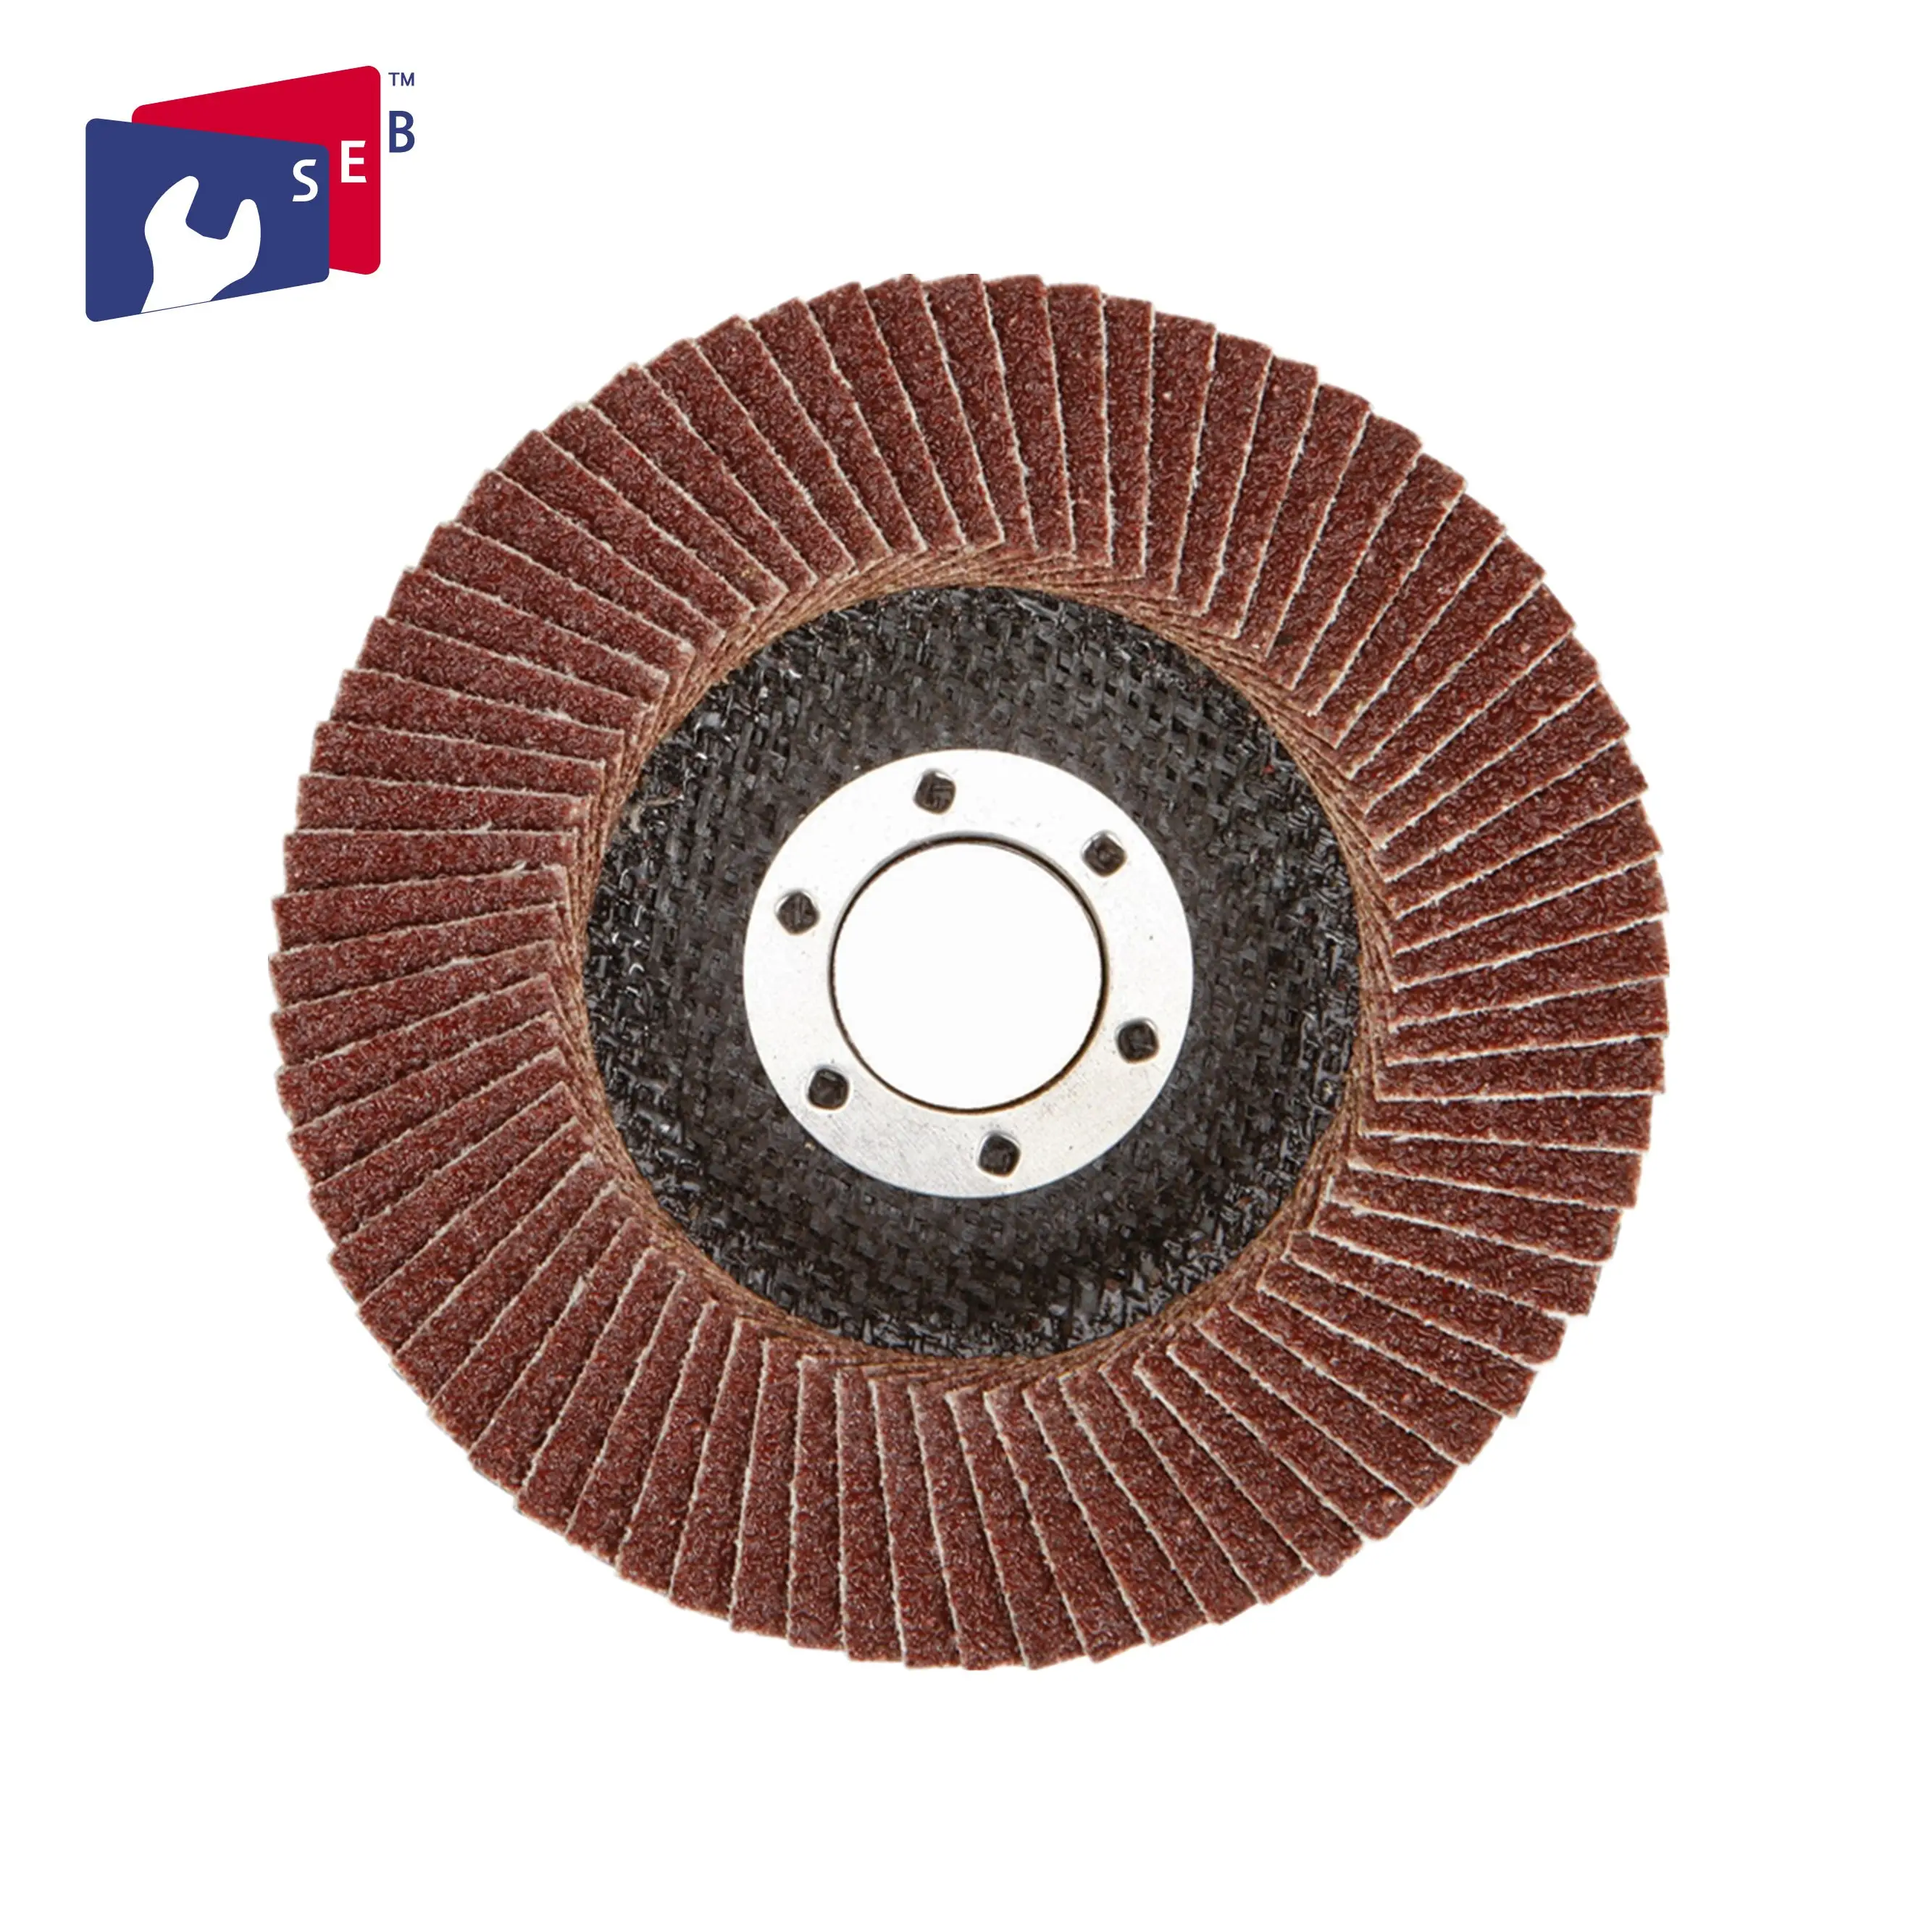 4-1/2 "Aluminium Oxide Grinding Wheel Kertas Pasir Flap Disc 150 Grit